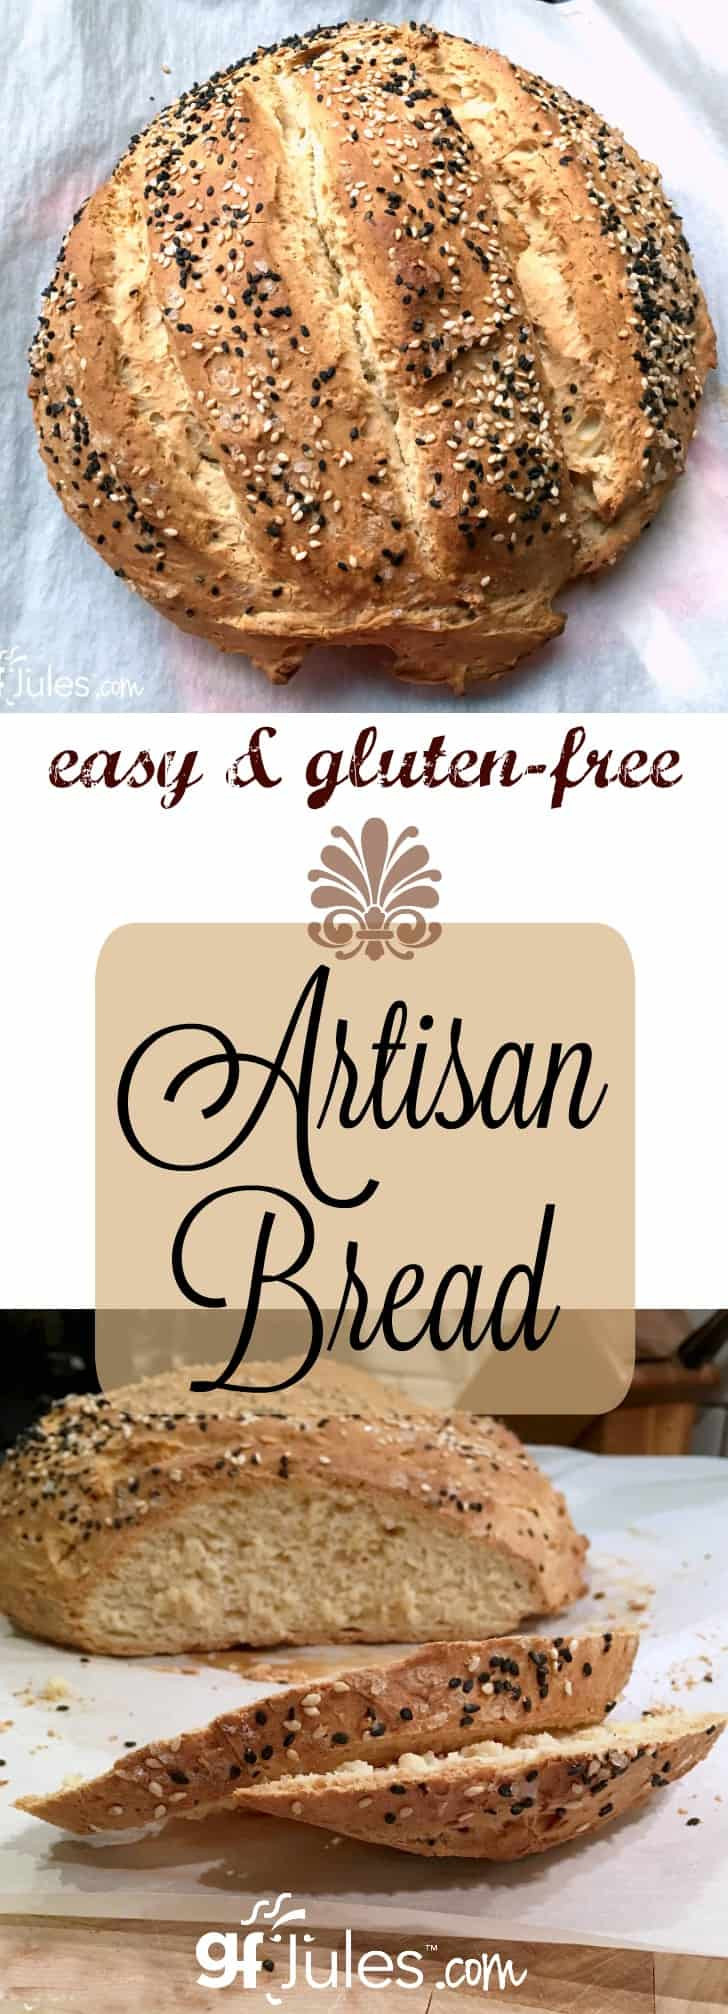 Artisan Gluten Free Bread
 Gluten Free Artisan Bread gfJules